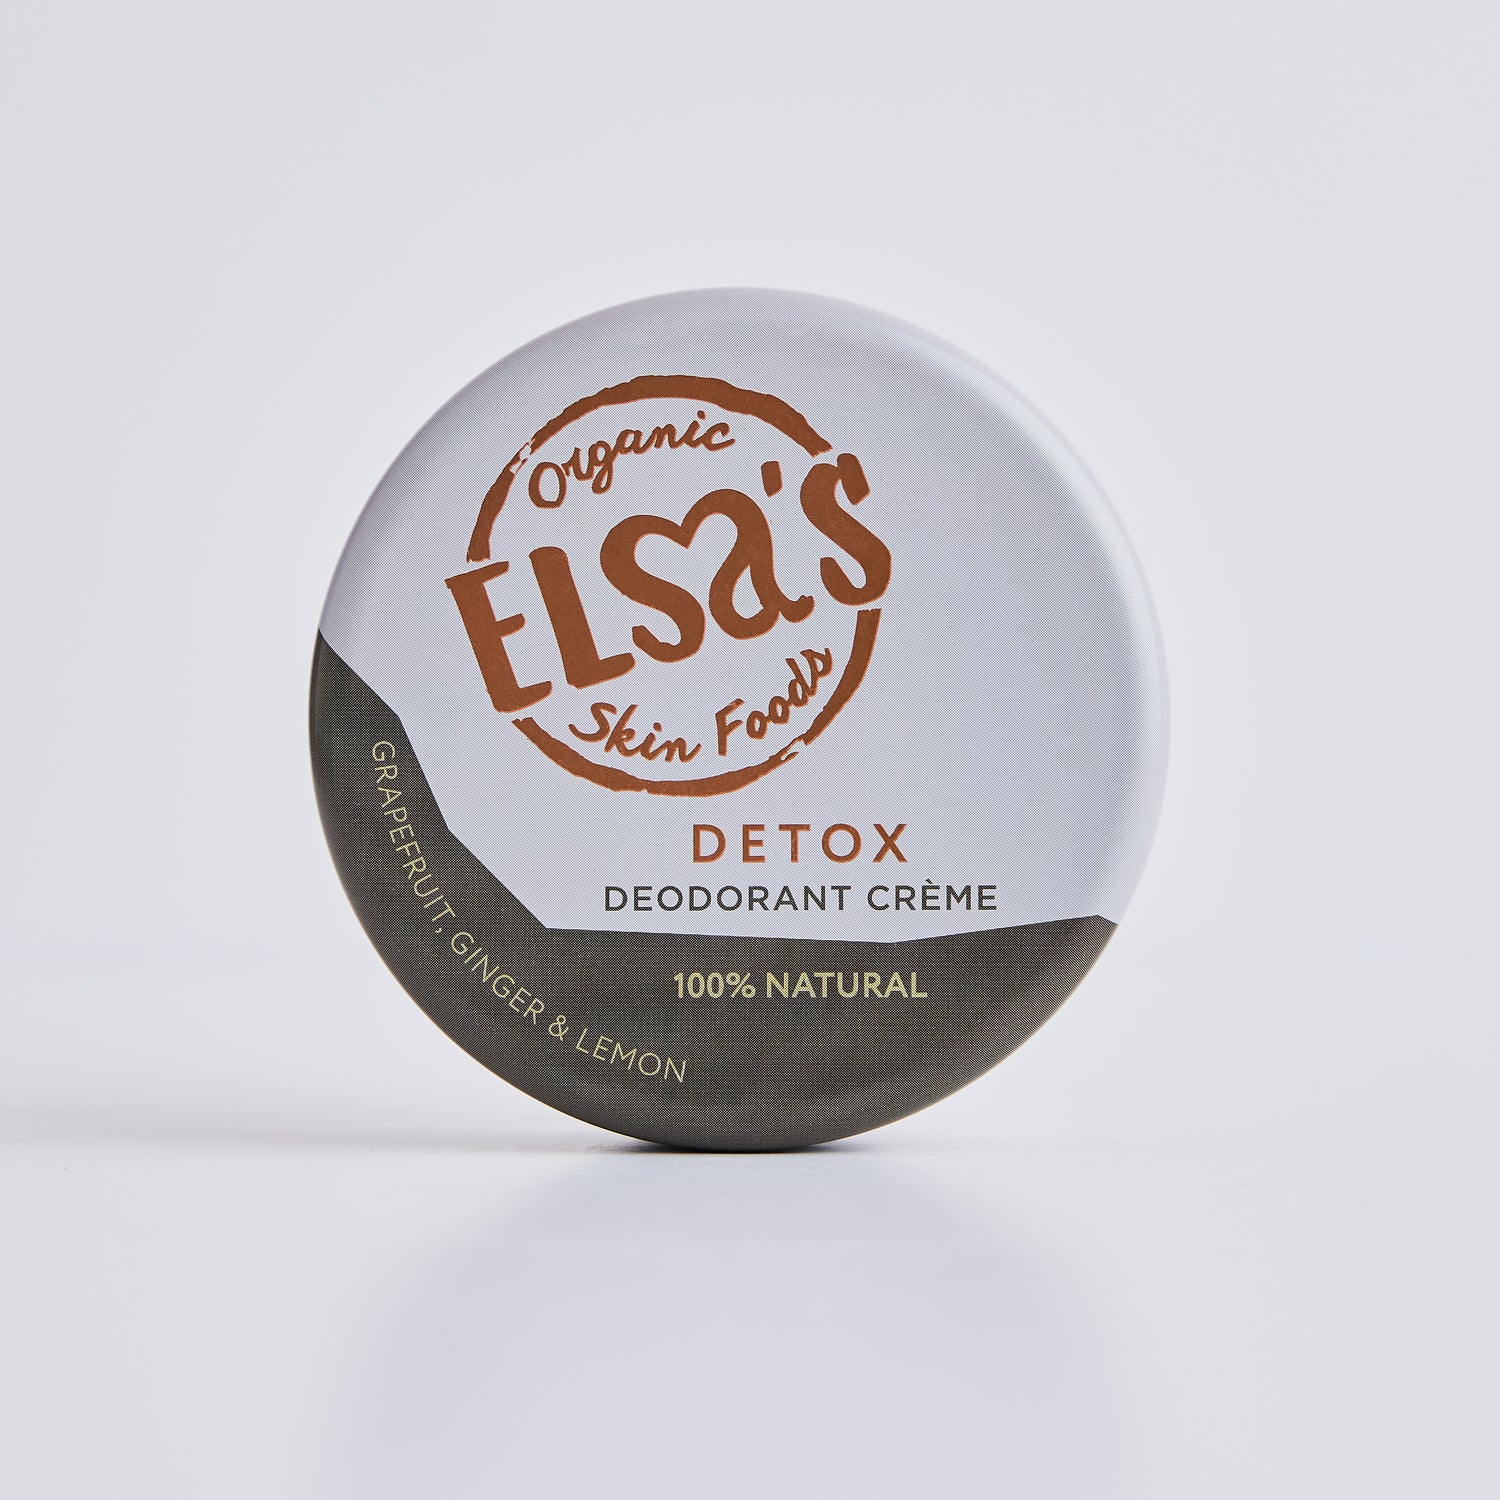 Elsas_Organic_Skinfoods Deodorant Cream Detox